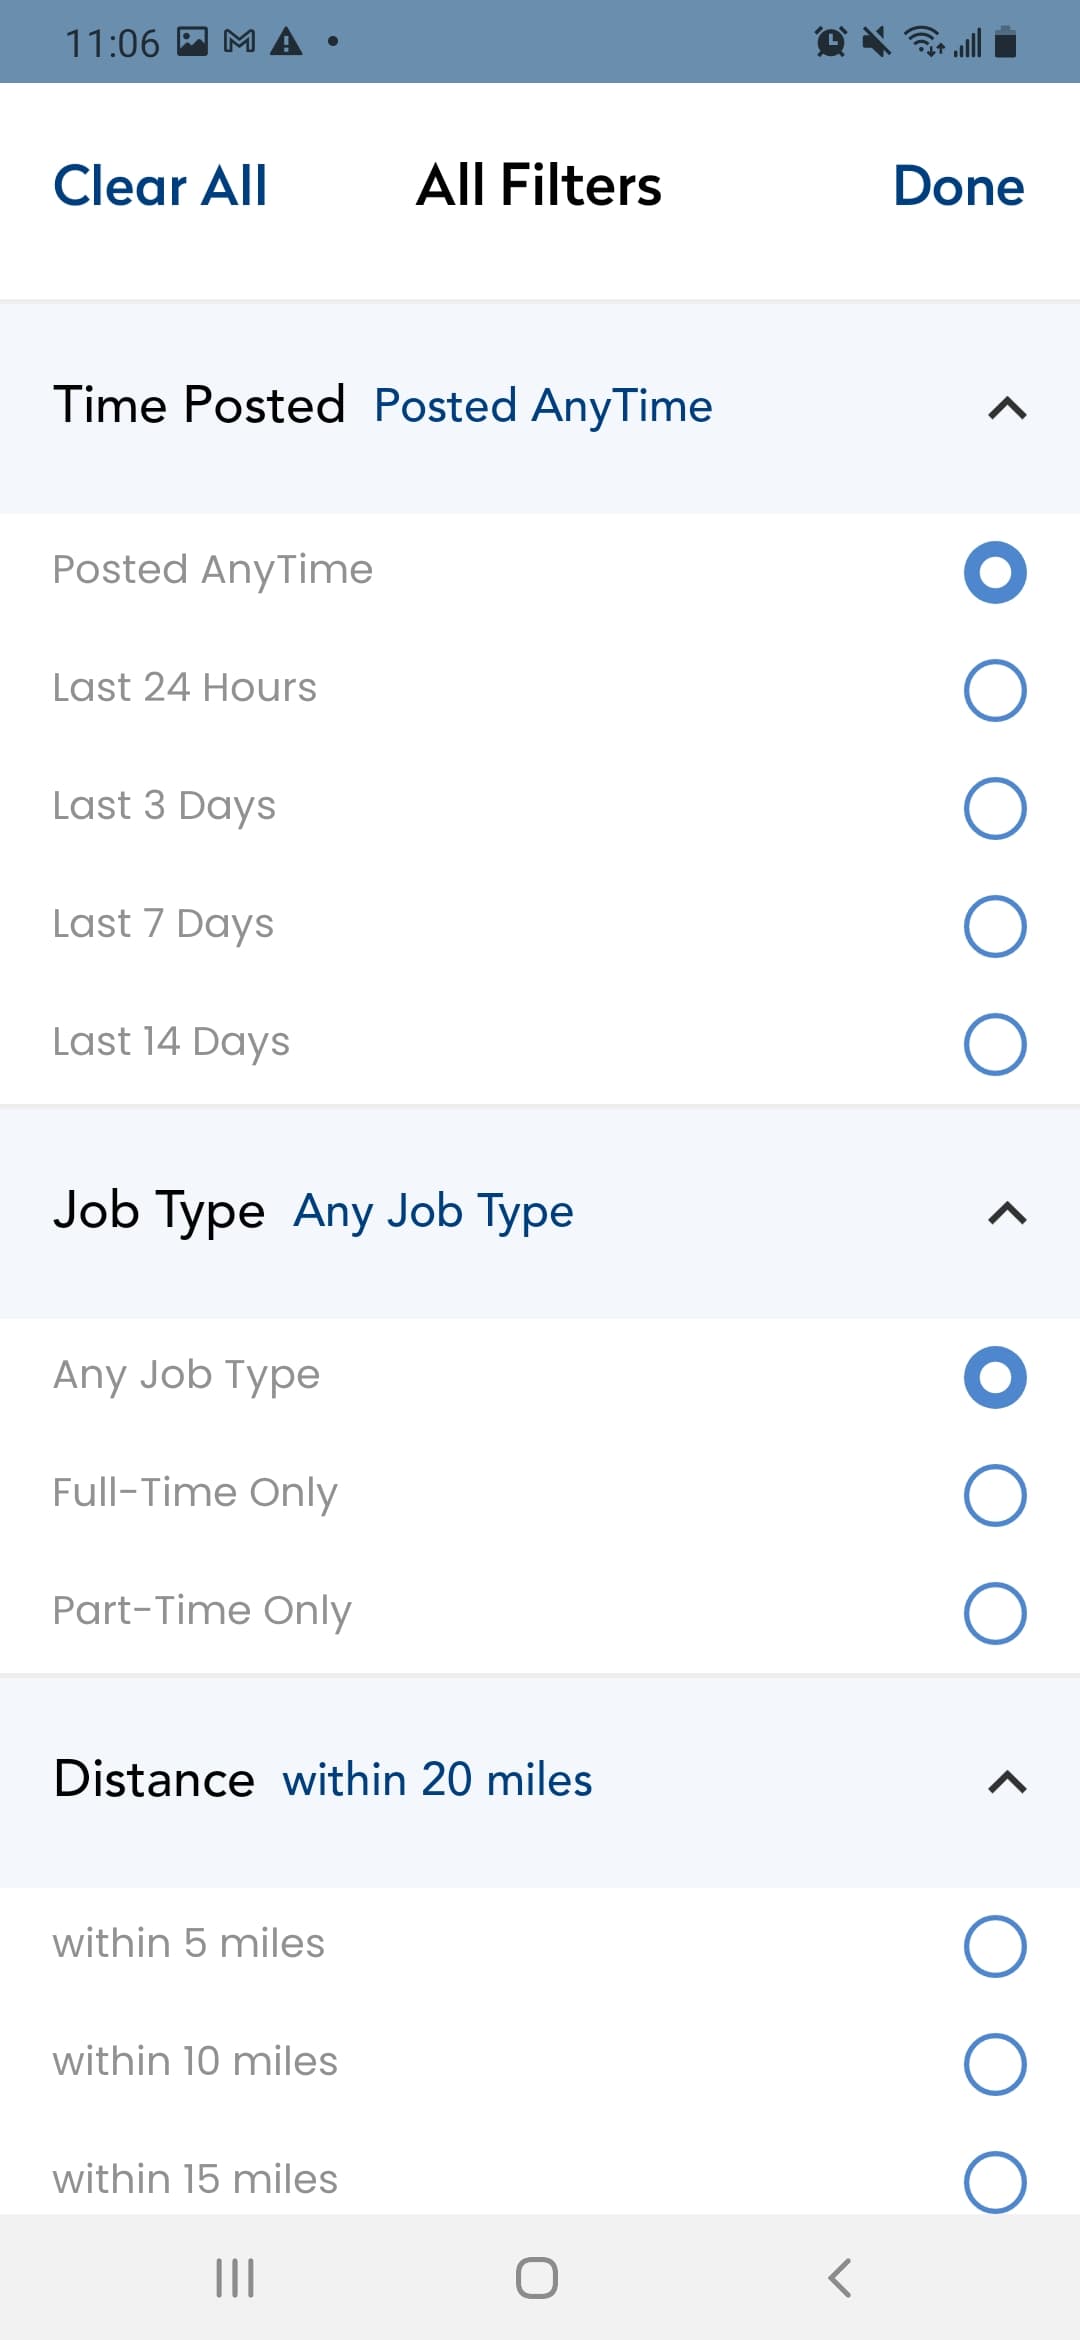 JobGet Job Filters